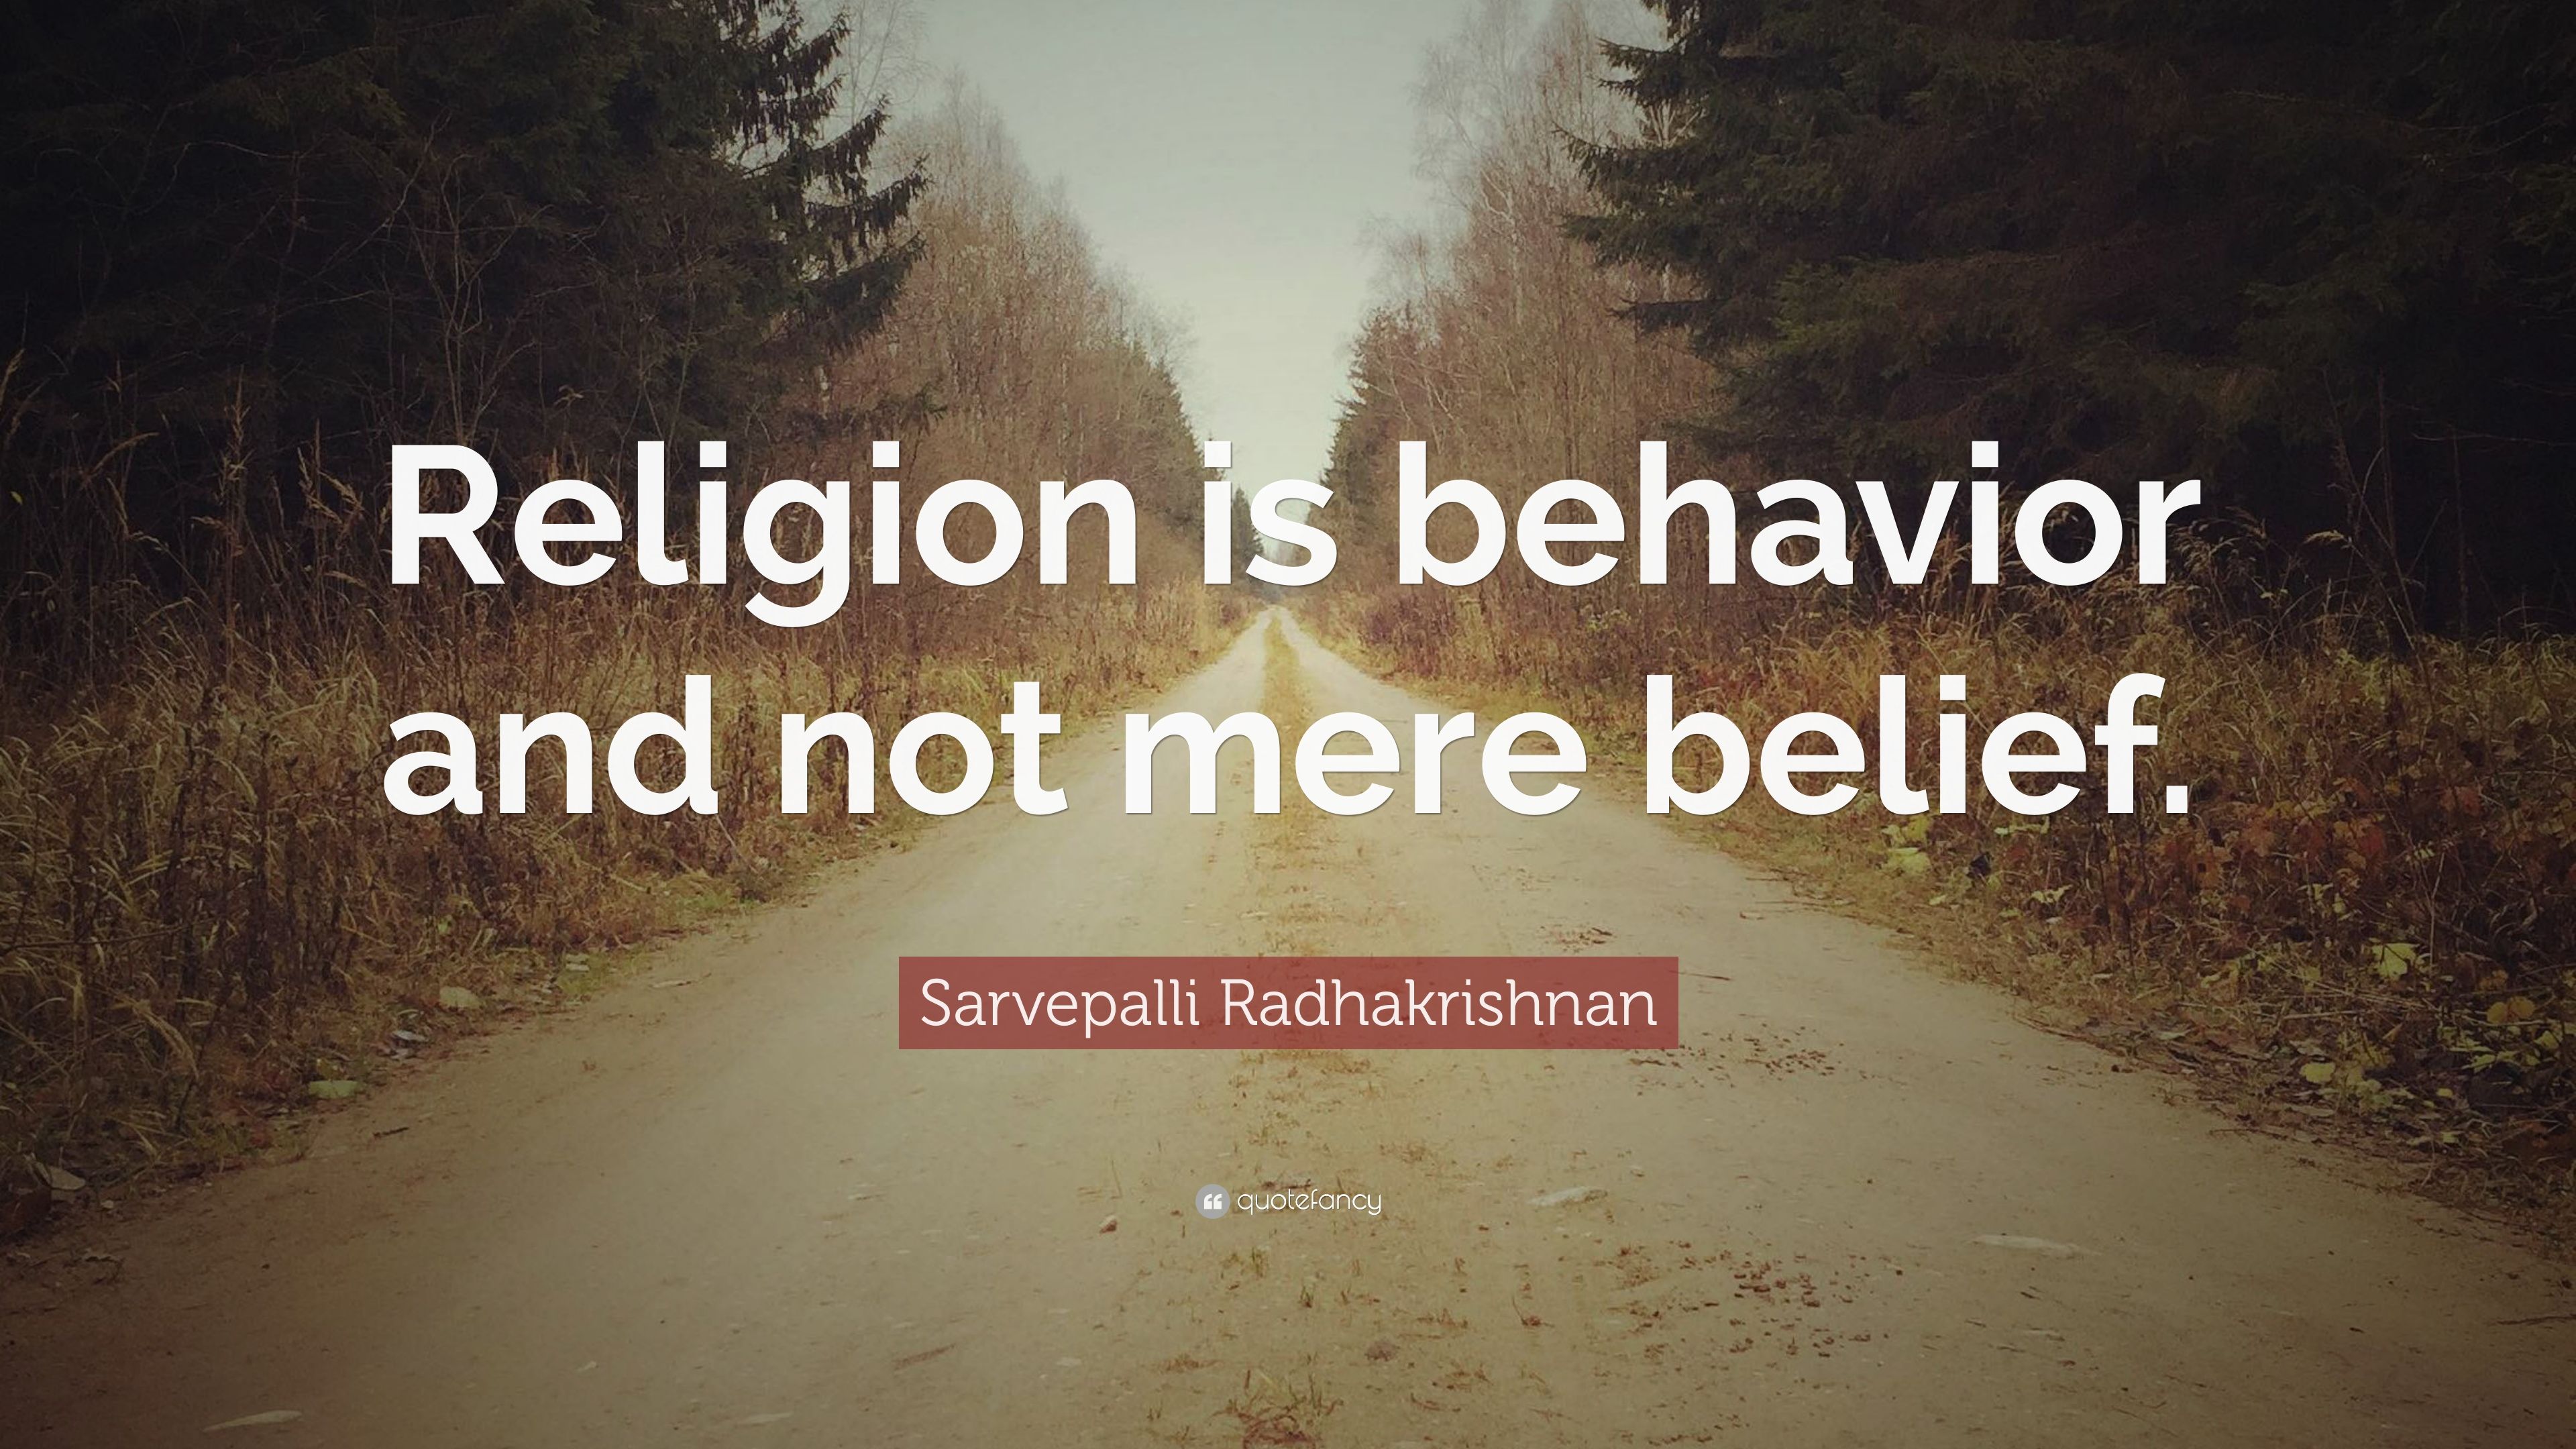 Sarvepalli Radhakrishnan Quote: “Religion is behavior and not mere